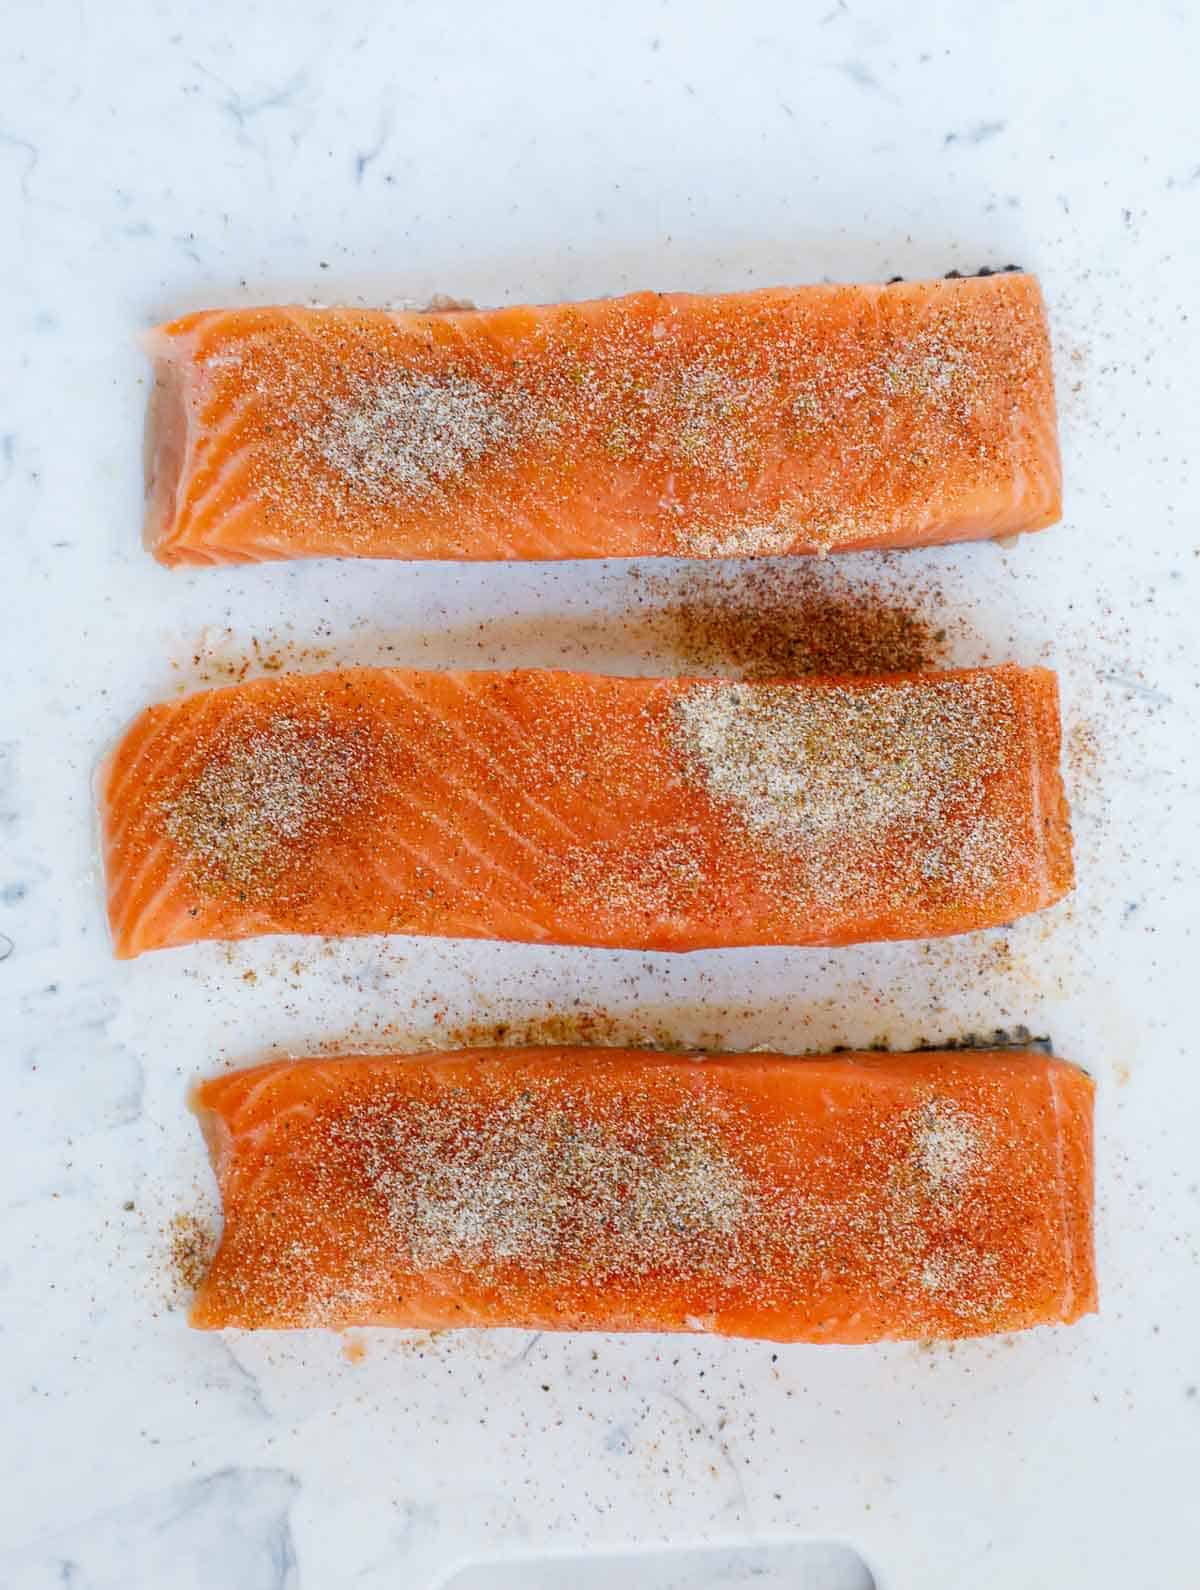 seasoning salmon before cooking